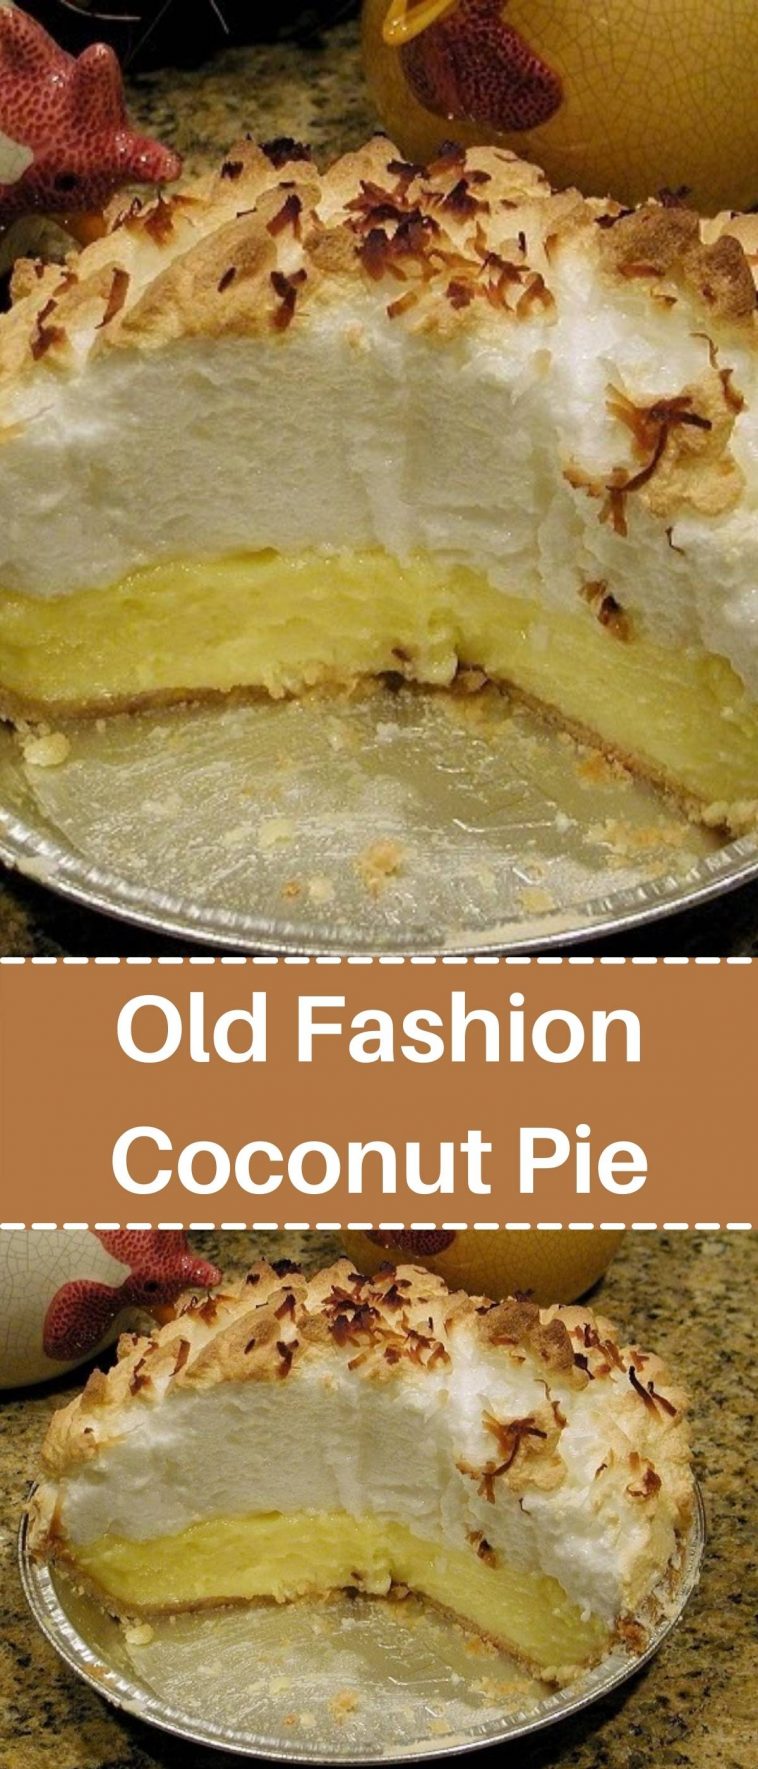 Old Fashion Coconut Pie